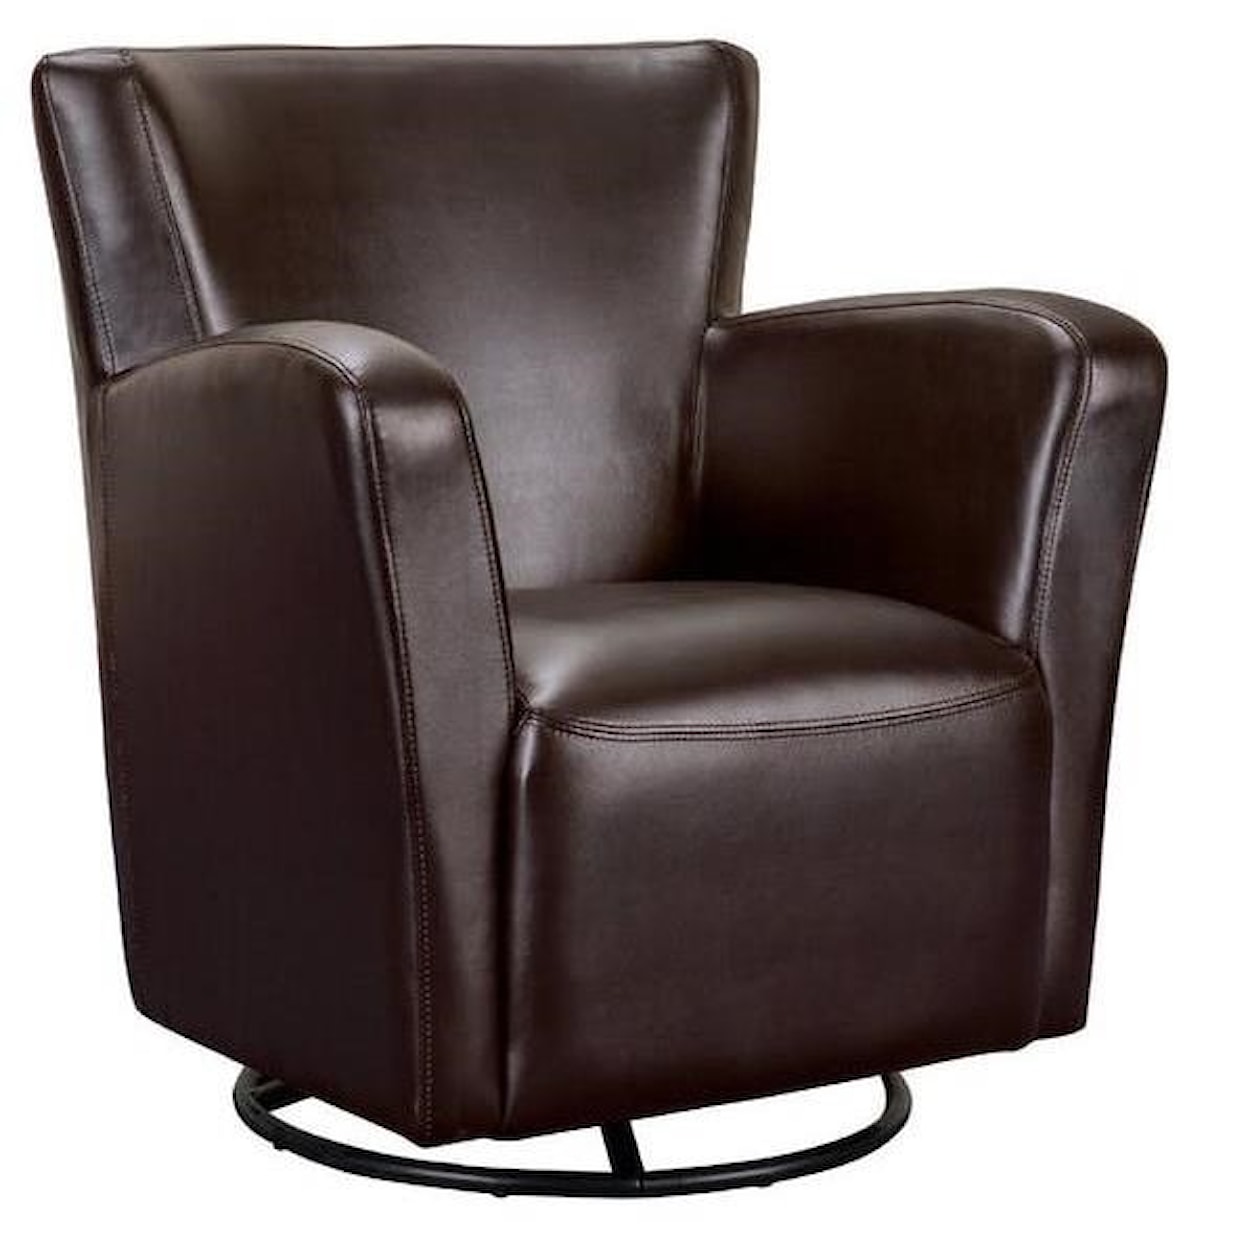 Elements International Marilyn UMV Swivel Upholstered Chair